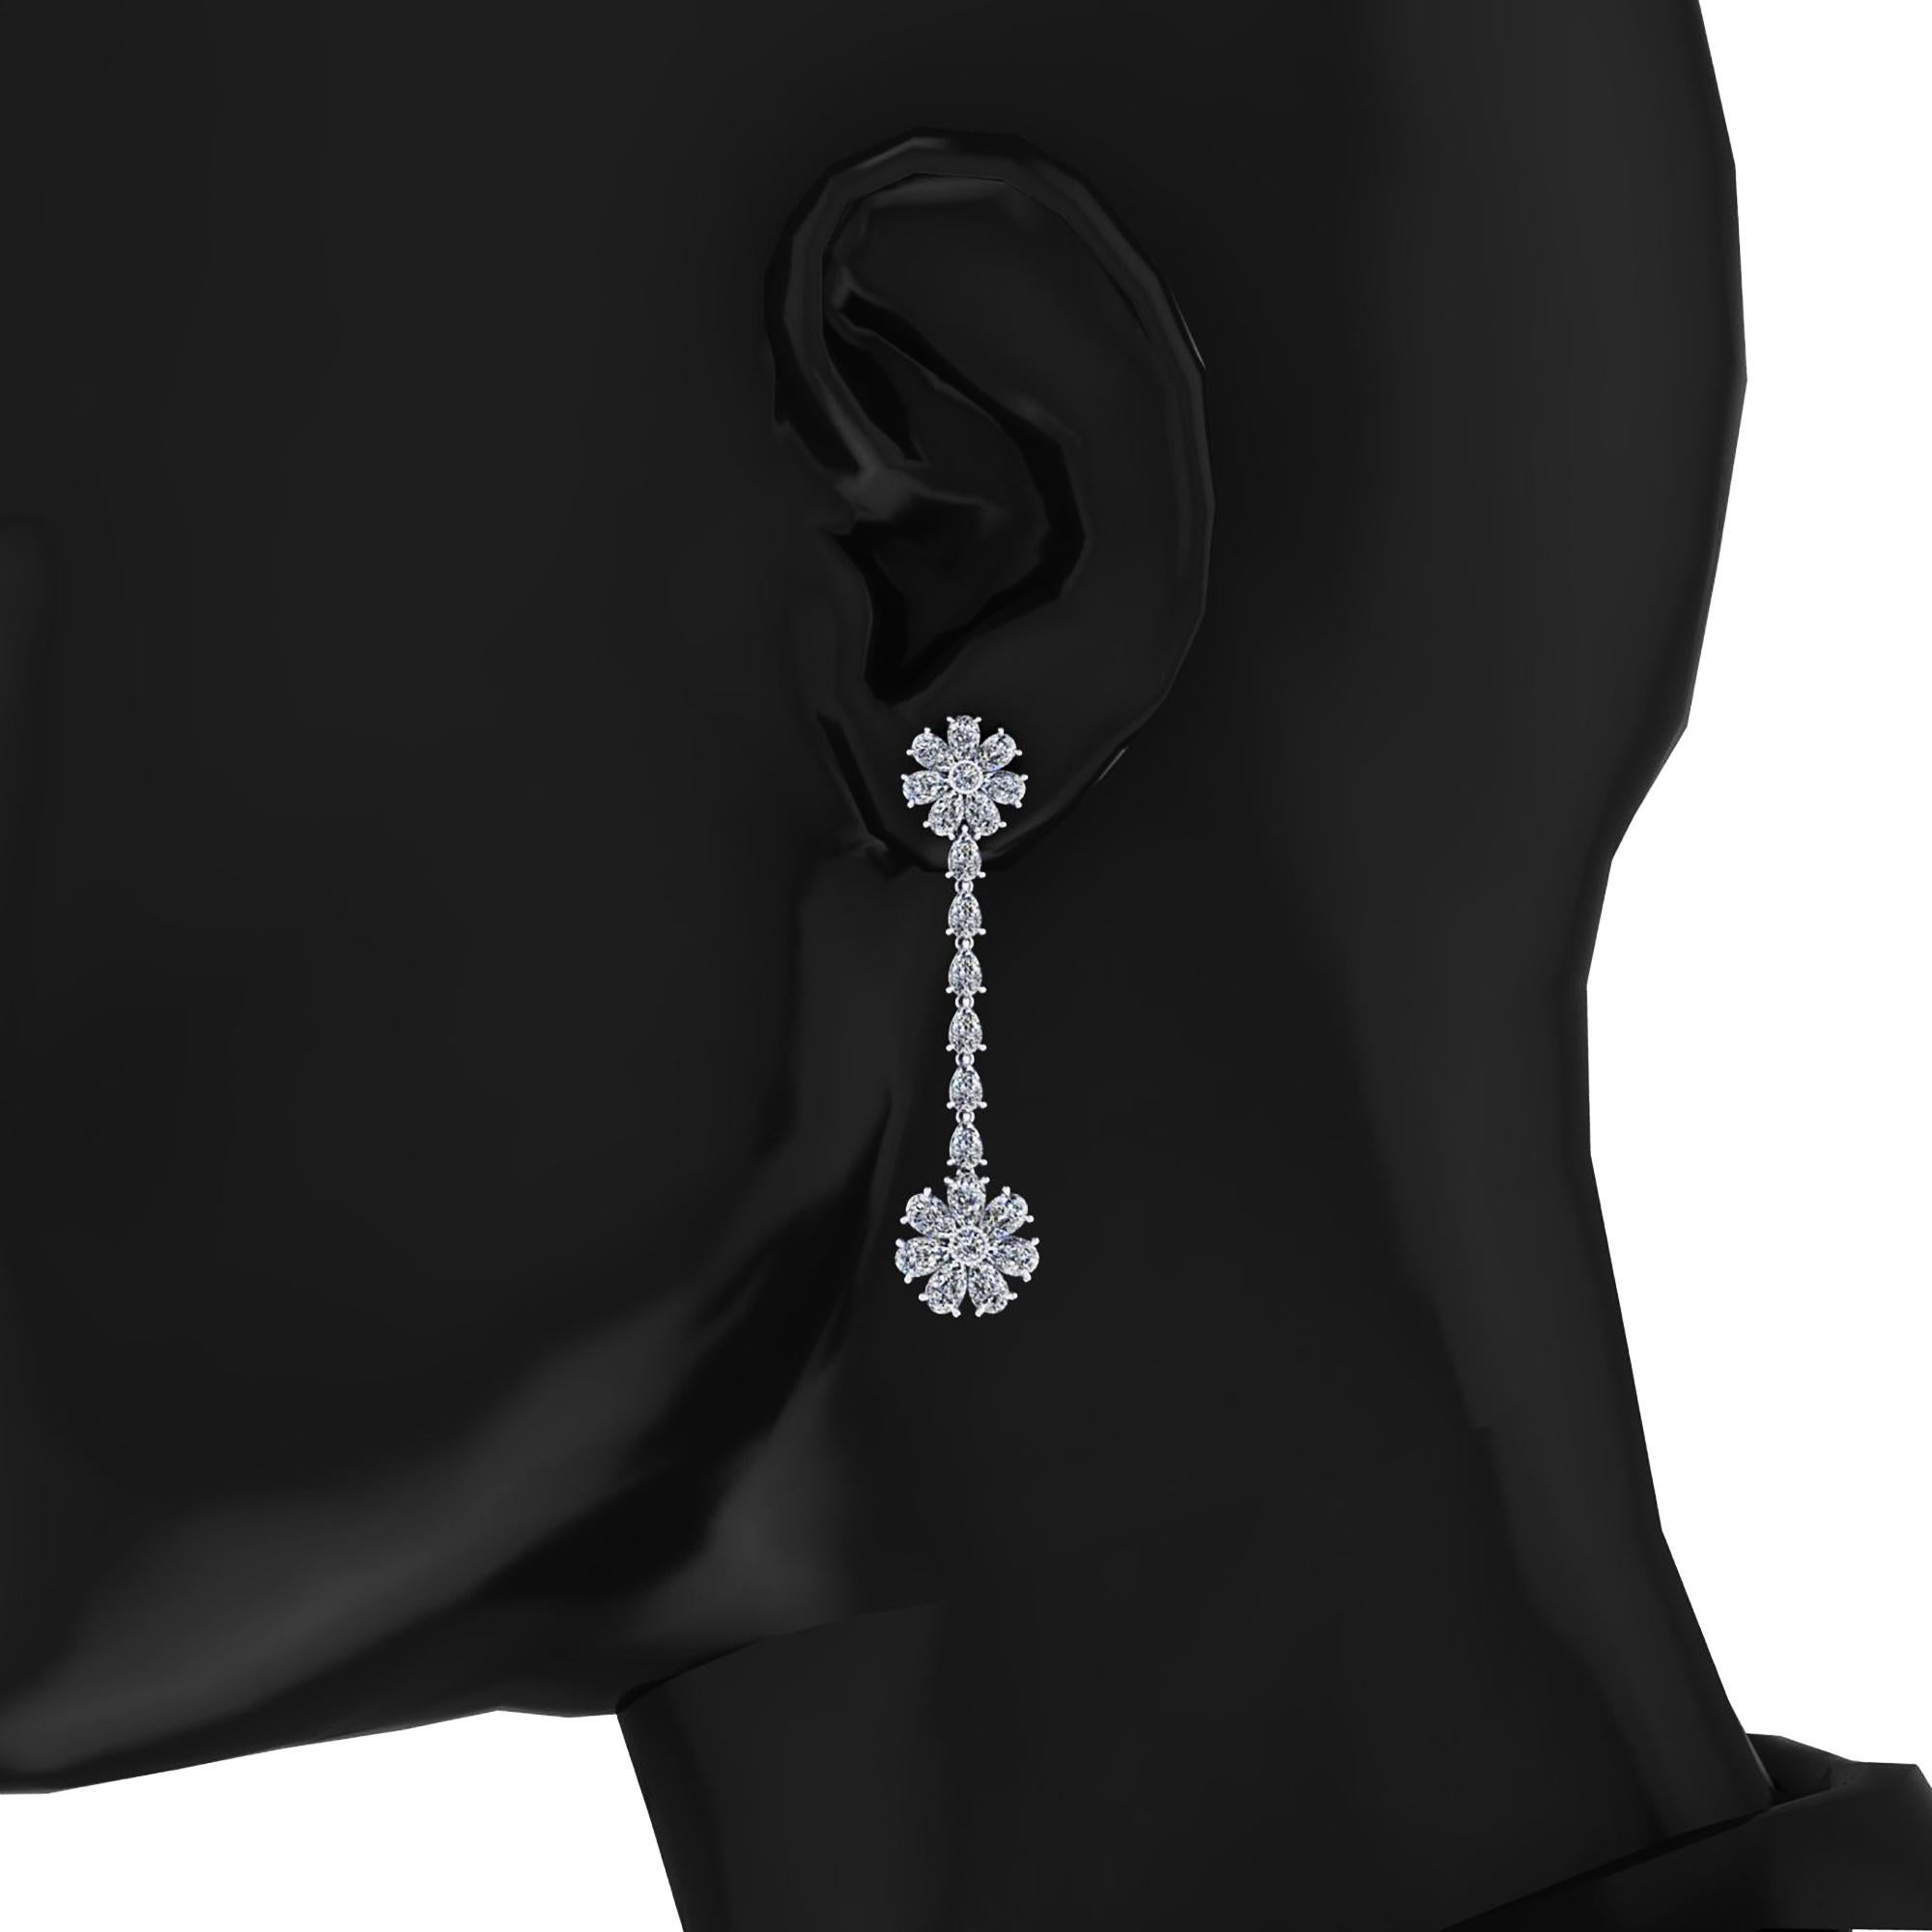 Pear Cut 5.60 Carat Pear Shape Diamond Flower Dangling Earrings in Platinum 950